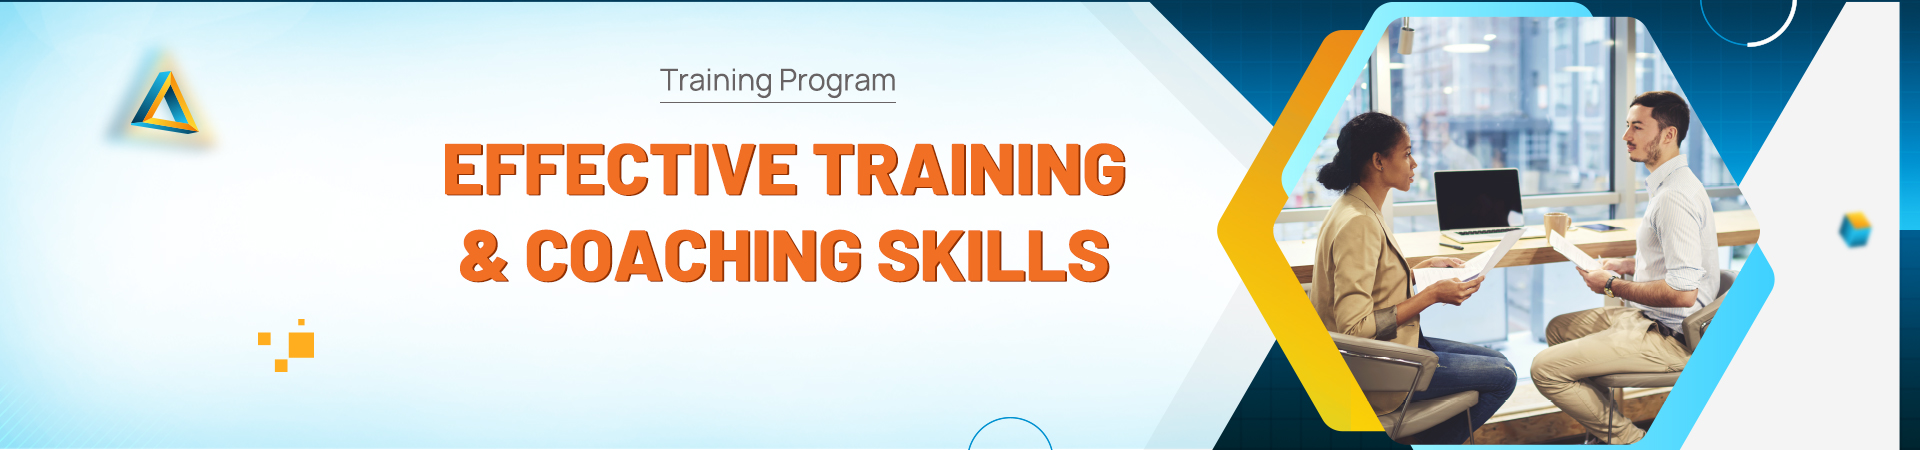 Effective Training & Coaching Skills